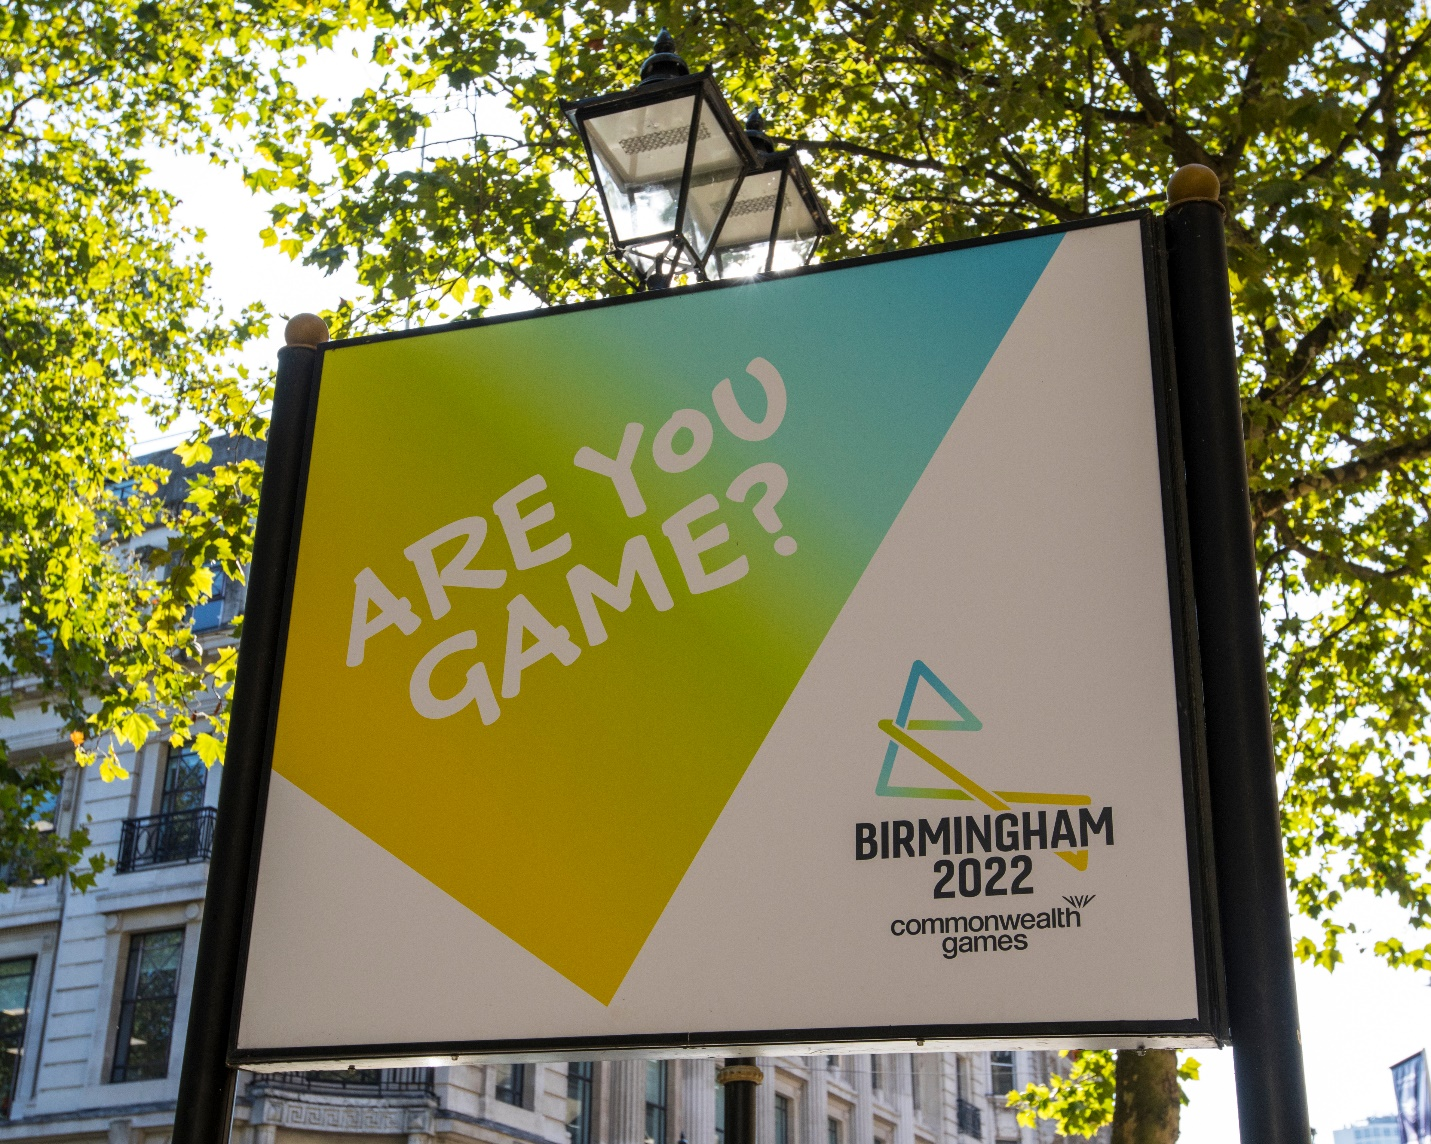 A Commonwealth games billboard